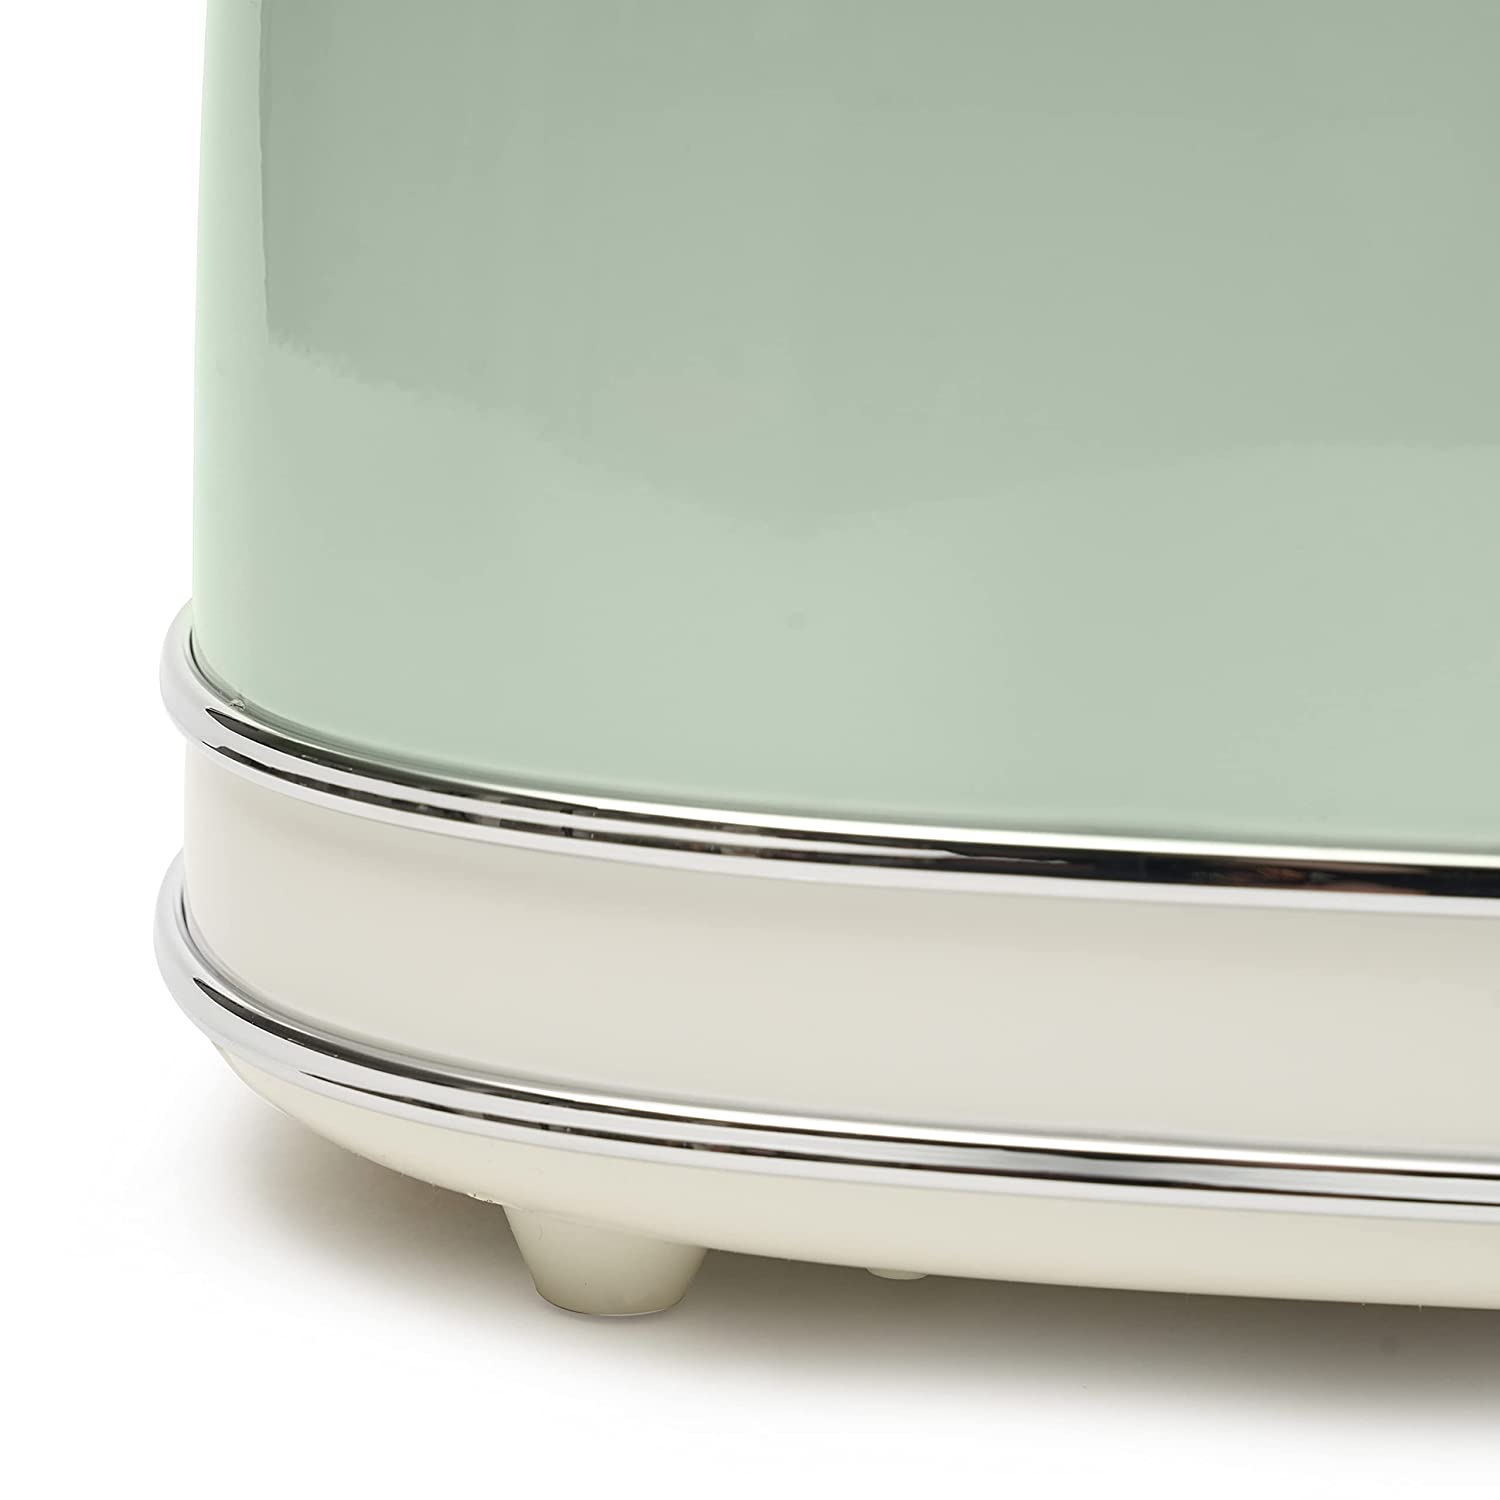 Ariete 155 Vintage 2 Slice Toaster, 810 watt, 6 toasting levels, in stainless steel painted in pastel green colour - Mahajan Electronics Online